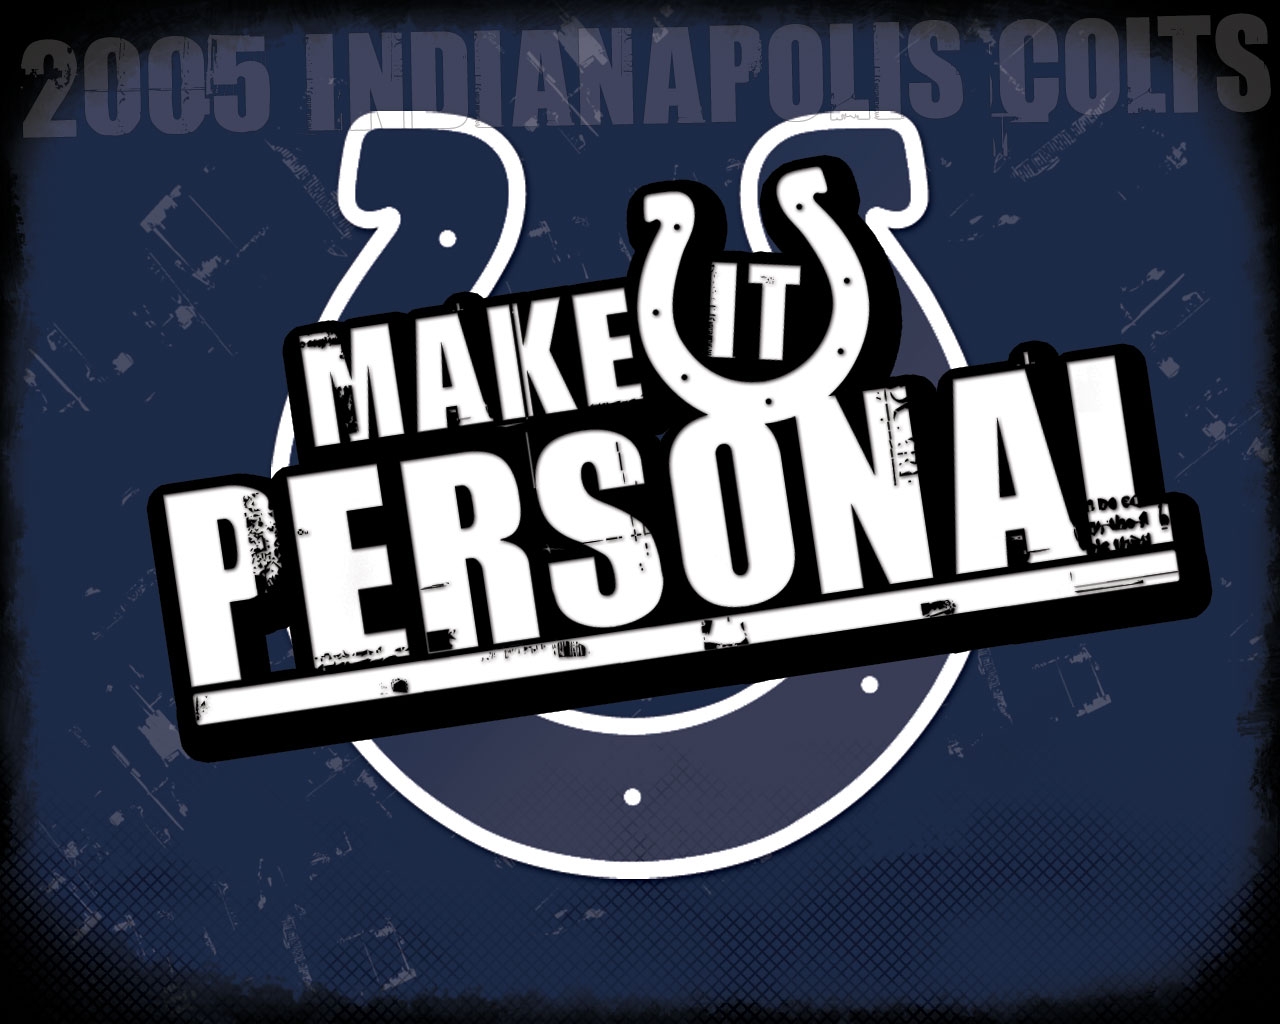 Make it personal